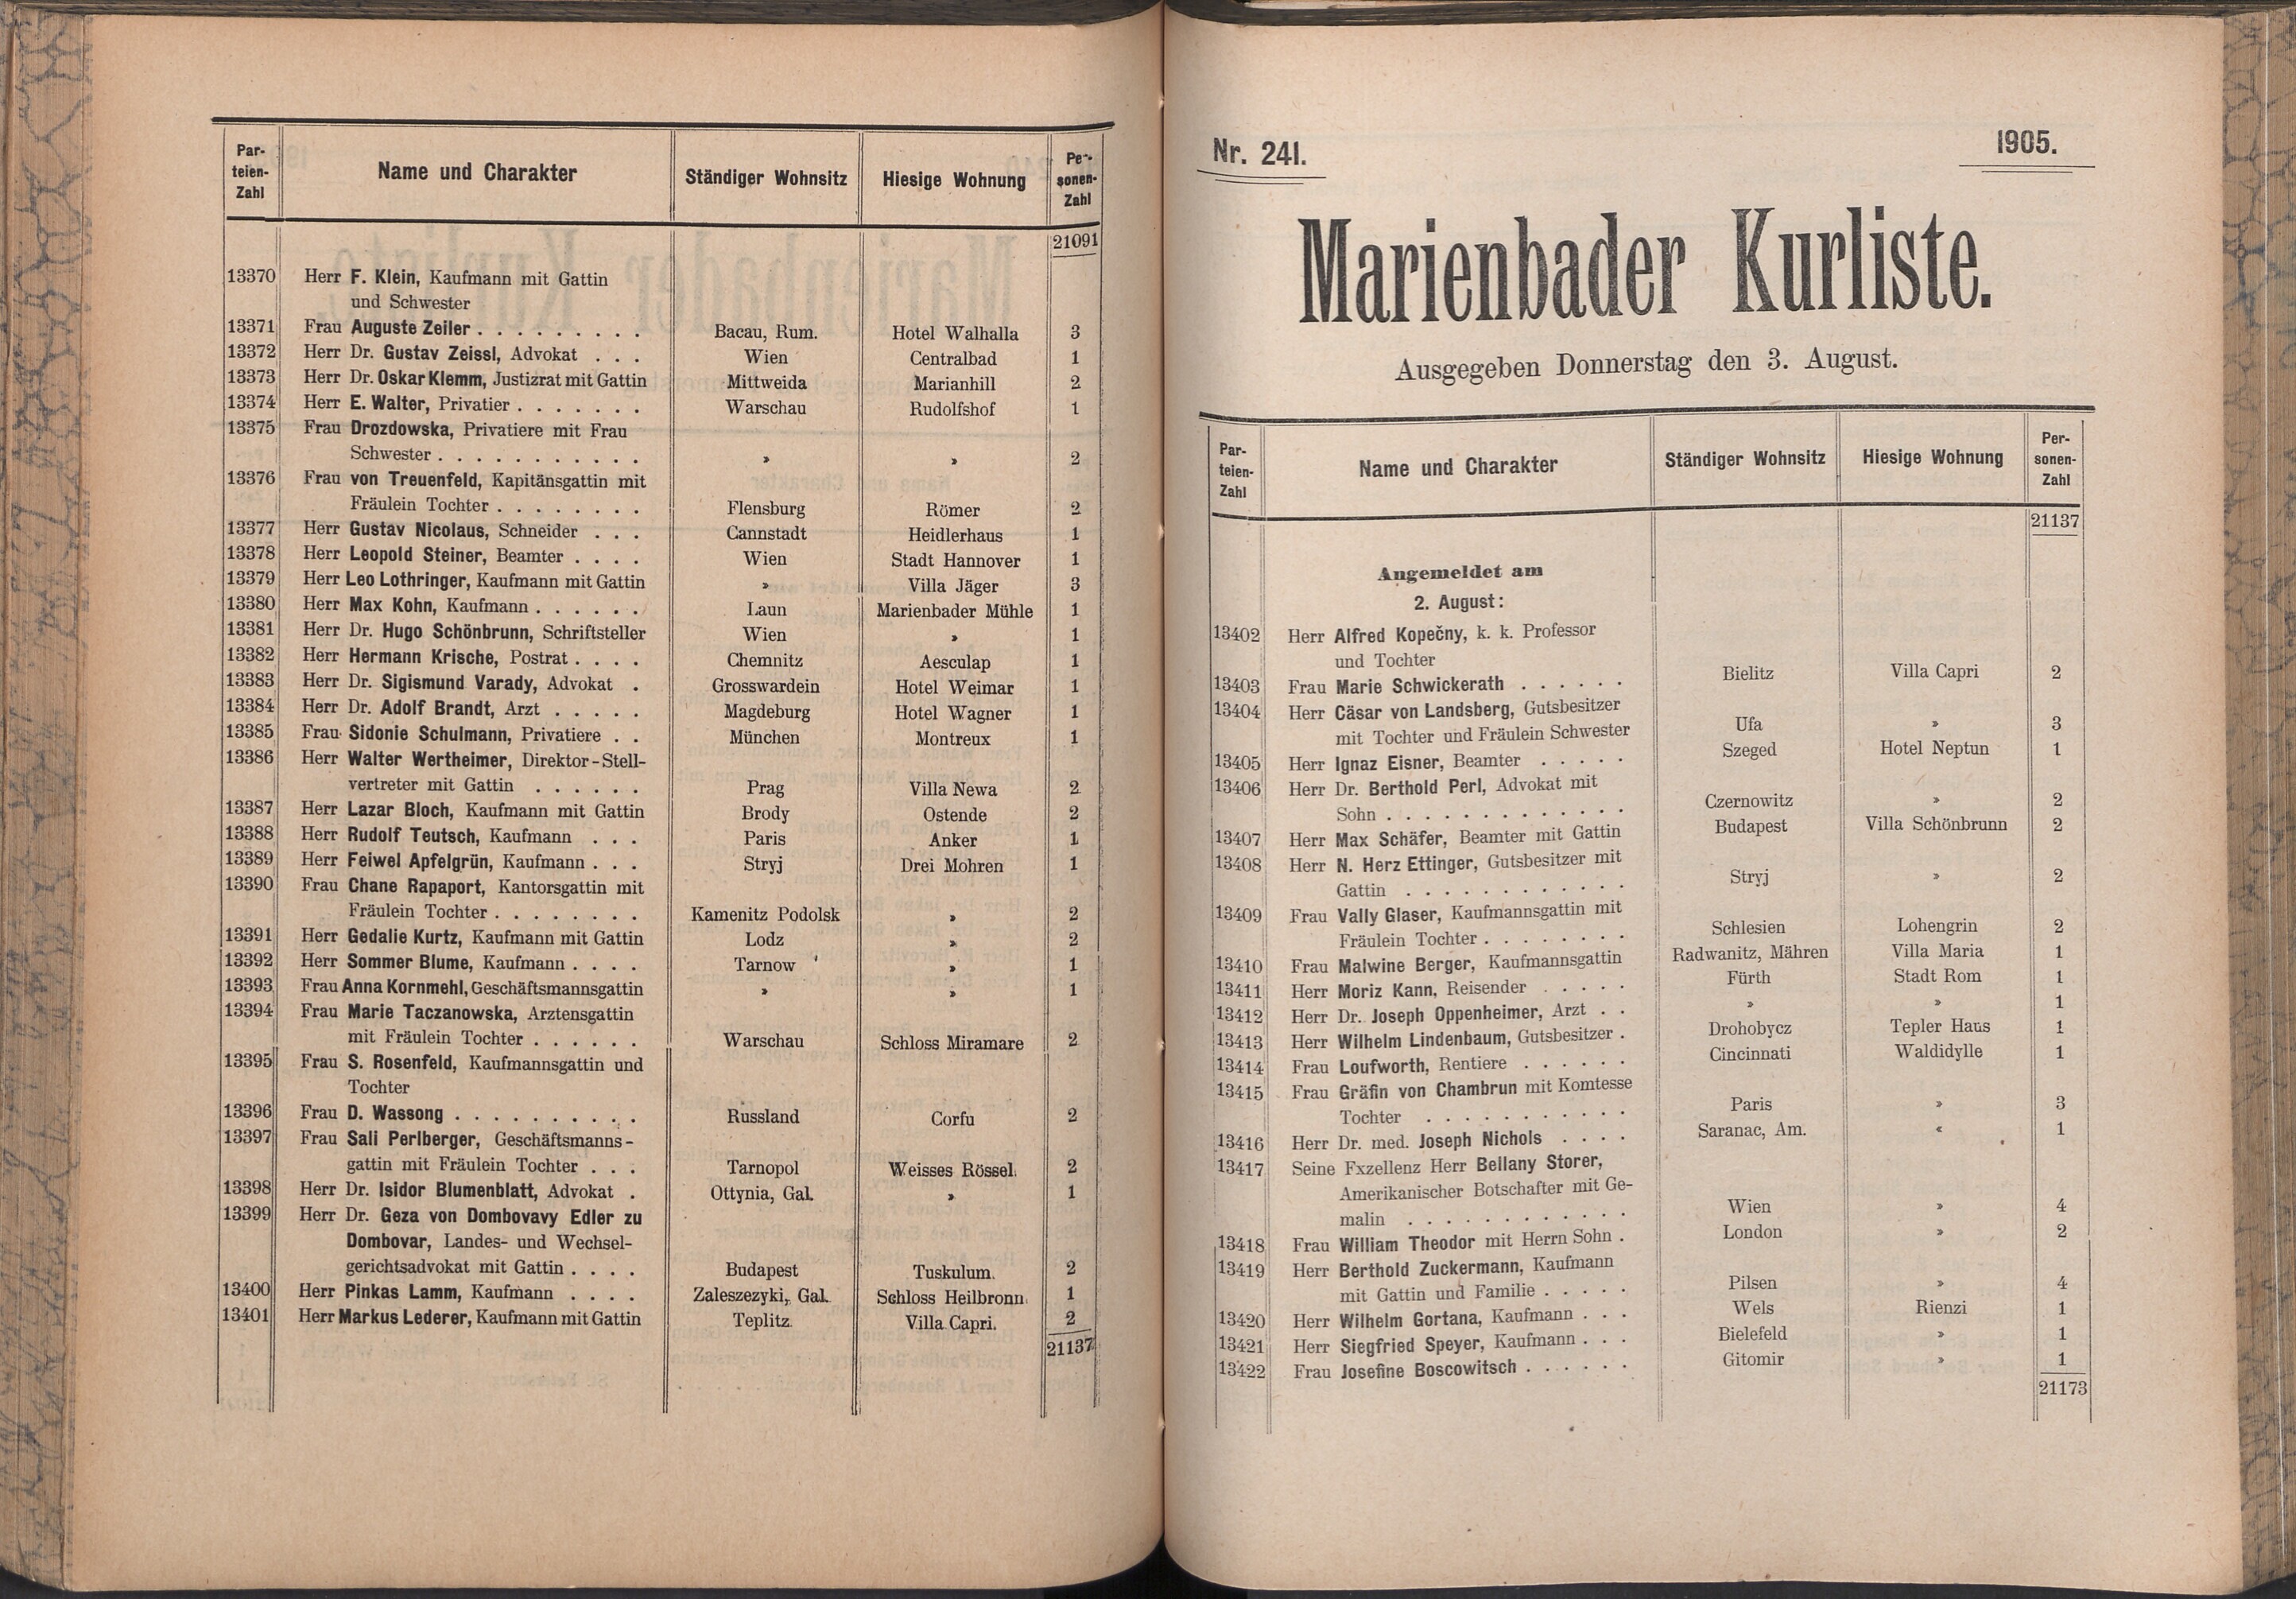 316. soap-ch_knihovna_marienbader-kurliste-1905_3160